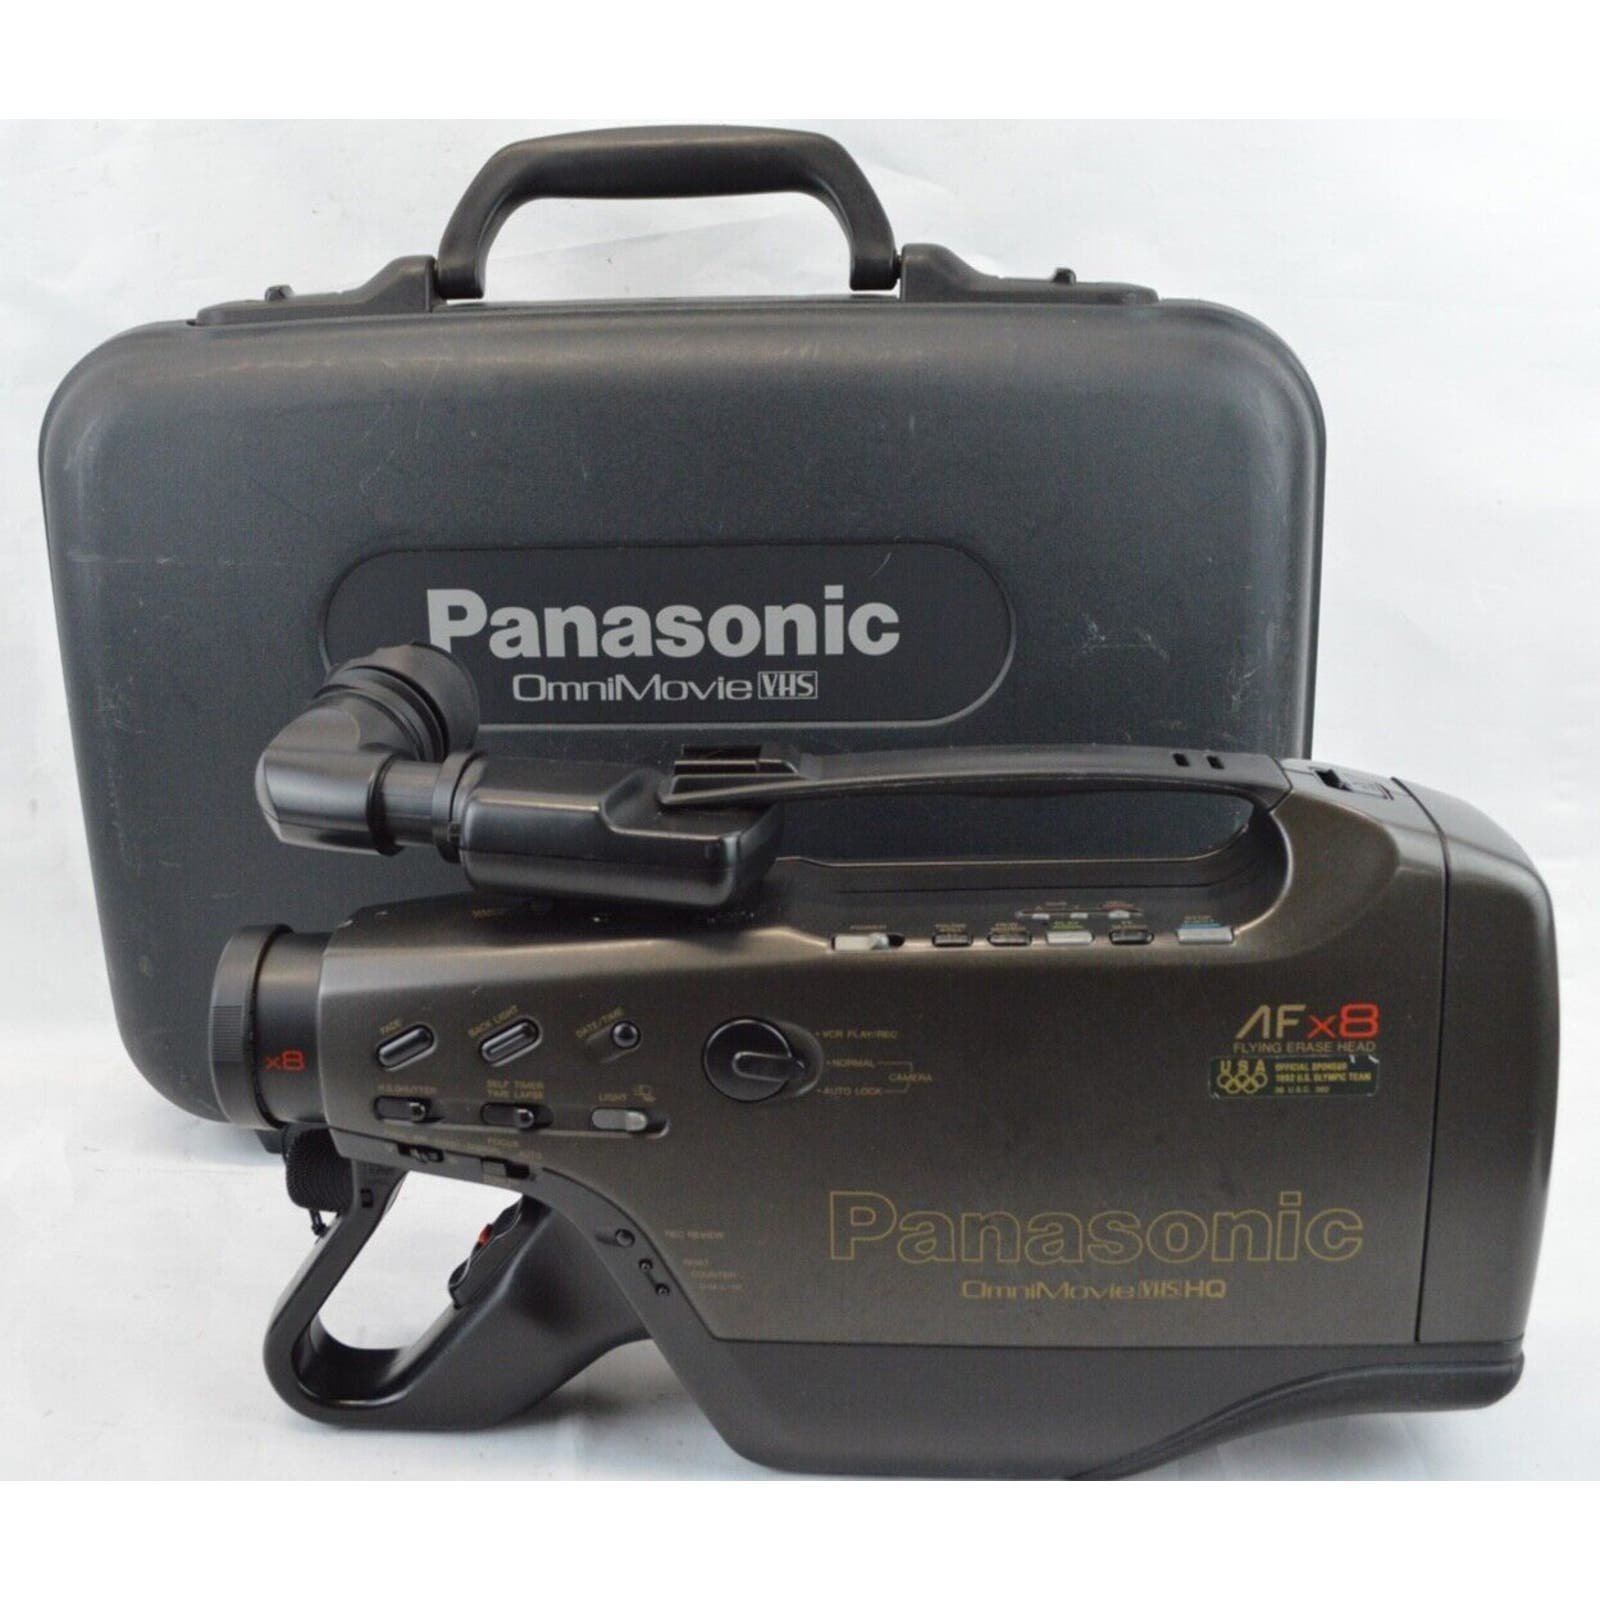 Panasonic AF X8 CCD Omnimovie VHS Camcorder Camera PV-420D UNTESTED hGAOrDRd7